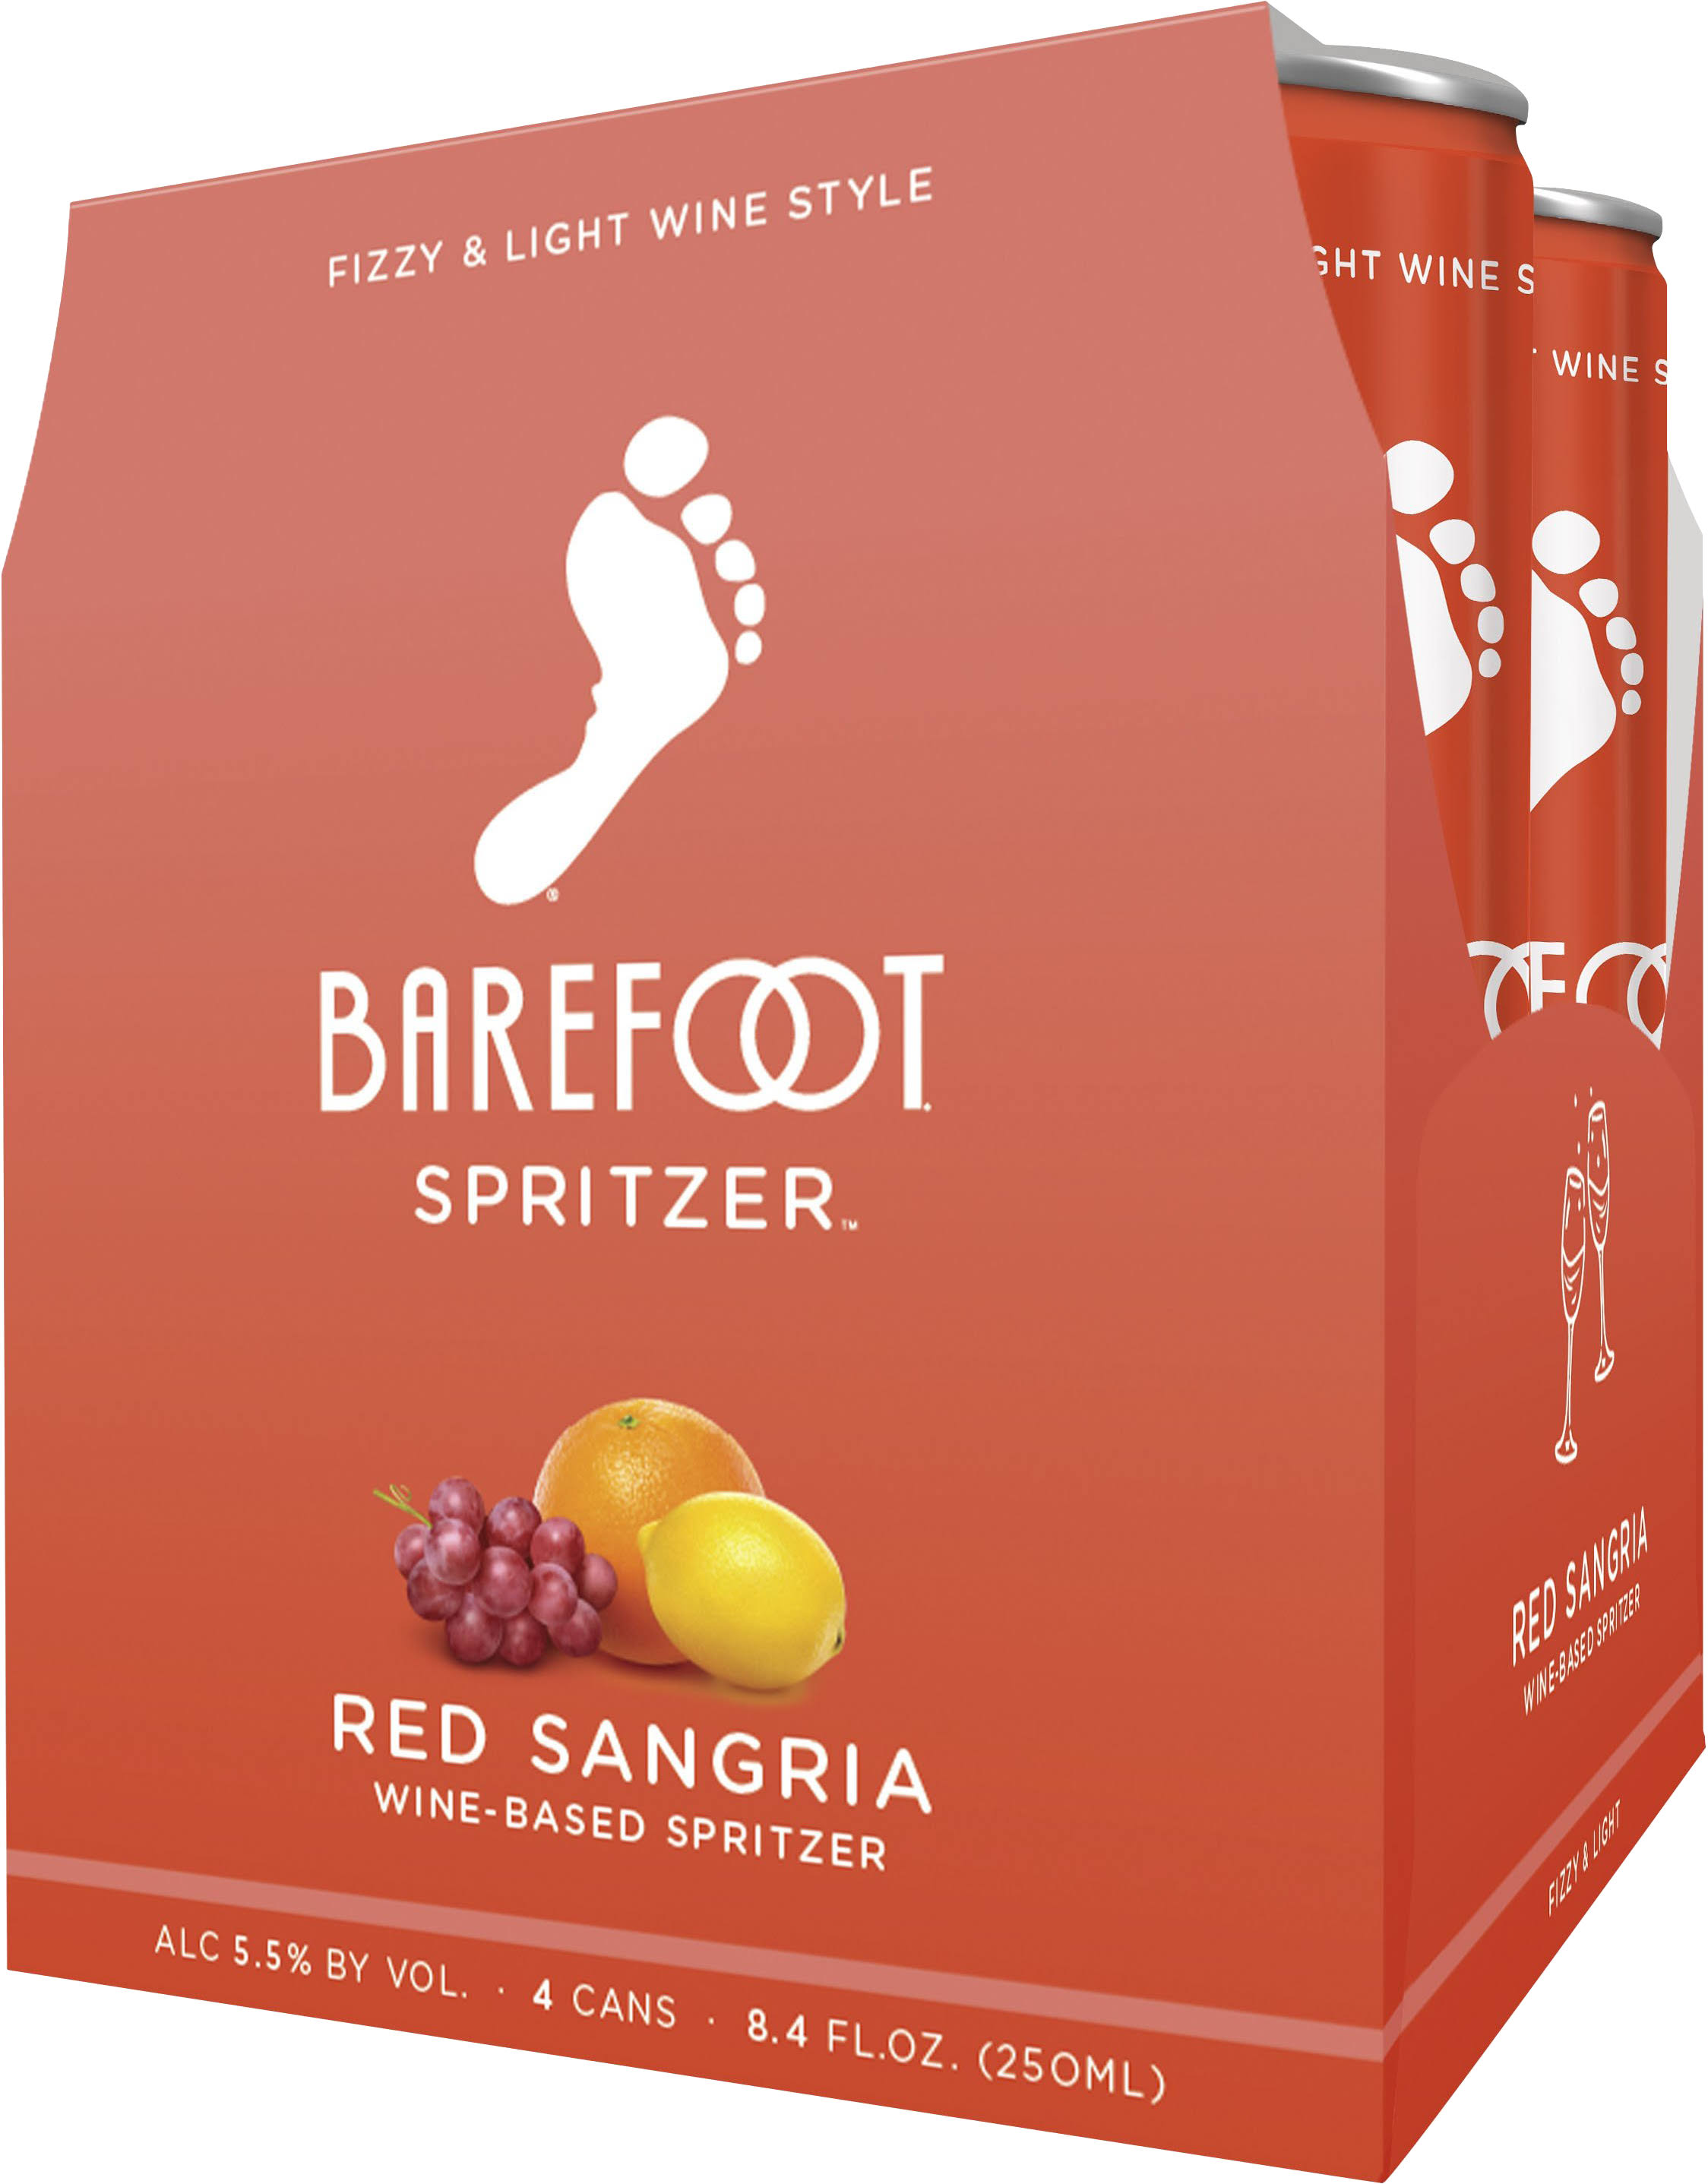 Barefoot Spritzer Red Sangria - 4 pack, 8.4 fl oz cans